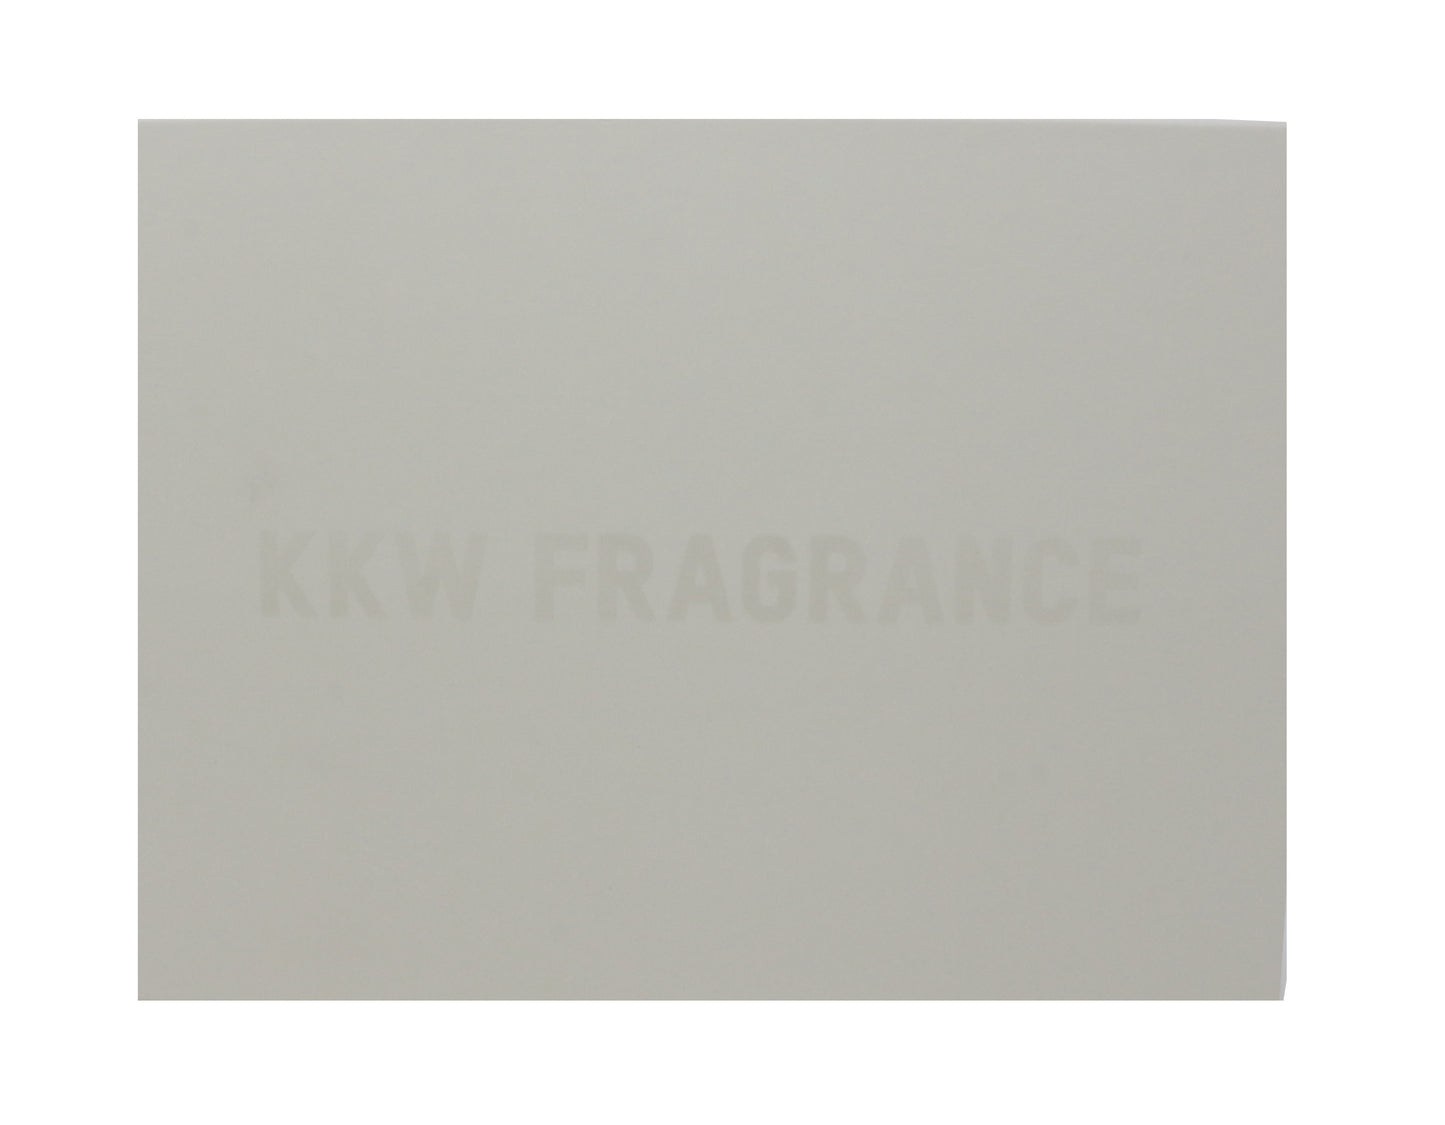 KKW CRYSTAL GARDENIA CITRUS by KIM KARDASHIAN  Eau De Parfum 2.5 oz/75 ml